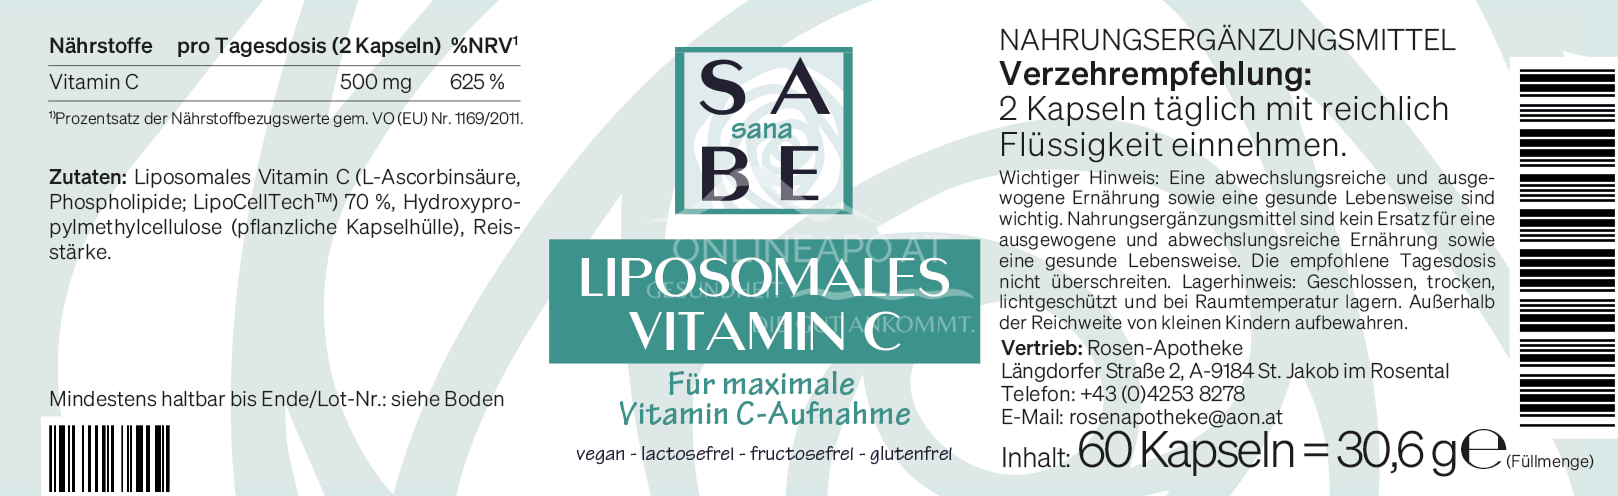 SABE sana Liposomales Vitamin C Kapseln